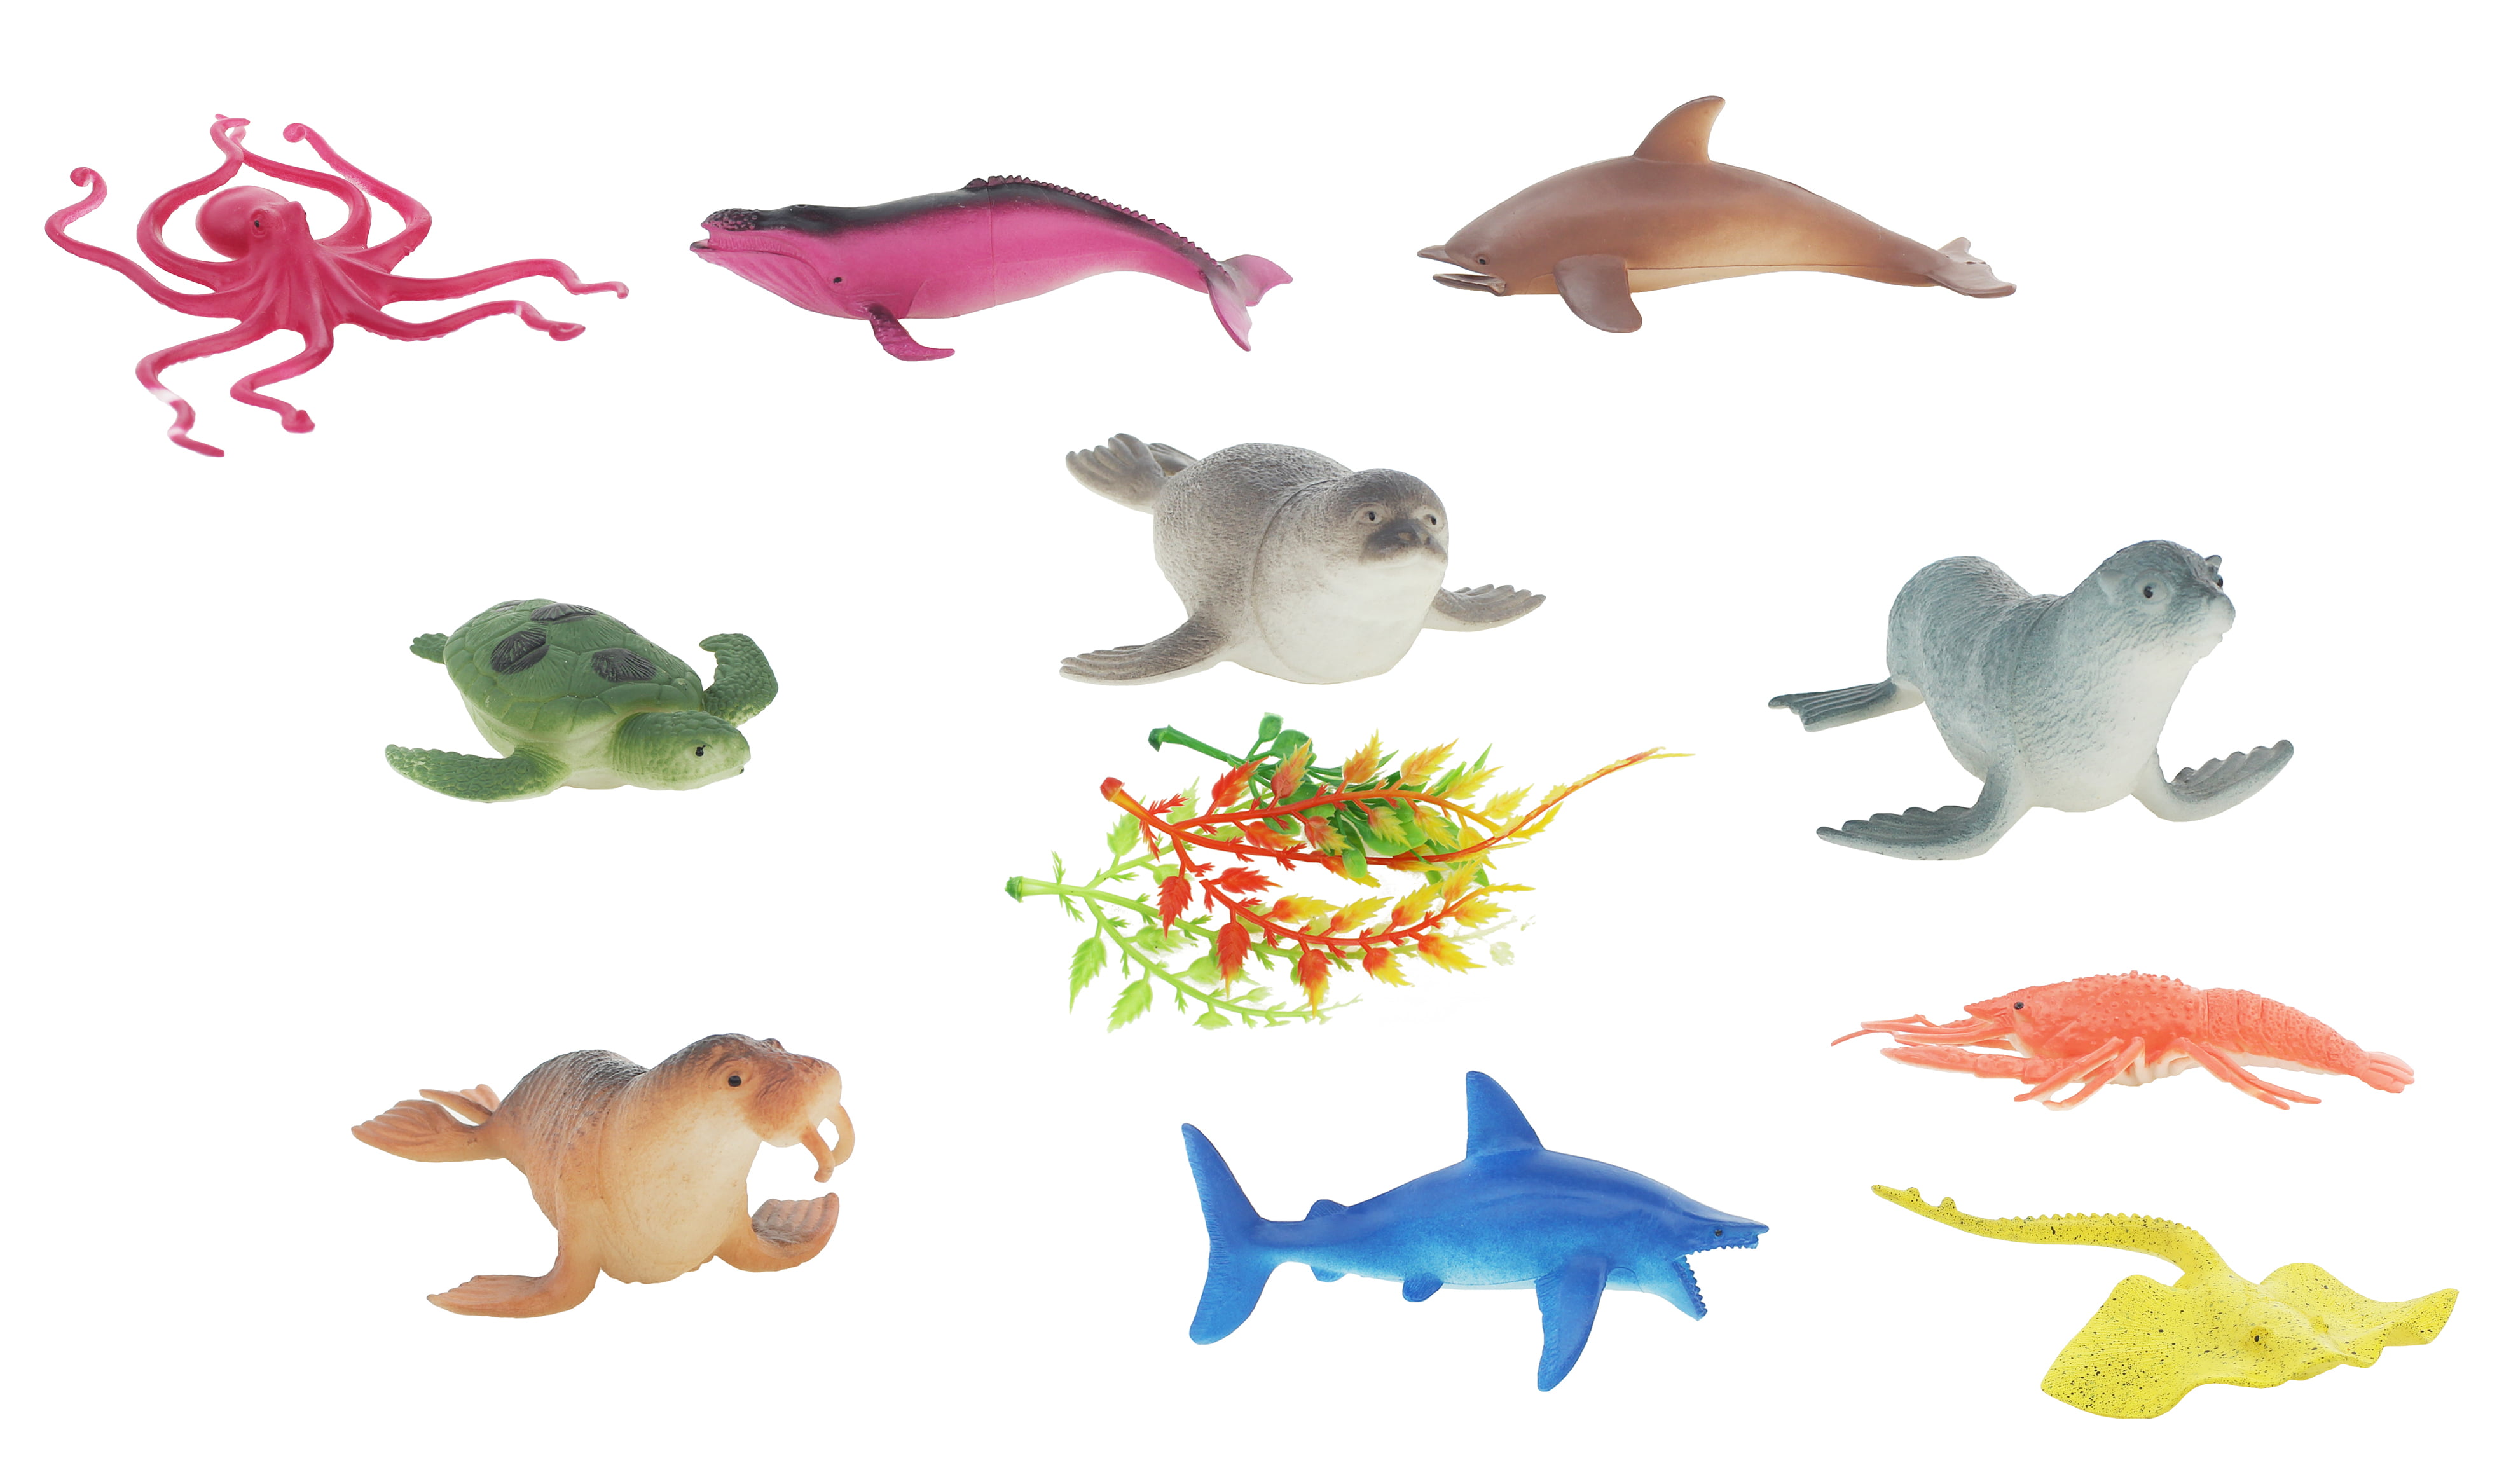 Aquatic Animals Pail Set Sea Life Animals Action Figure Toys Kids Collectibles 